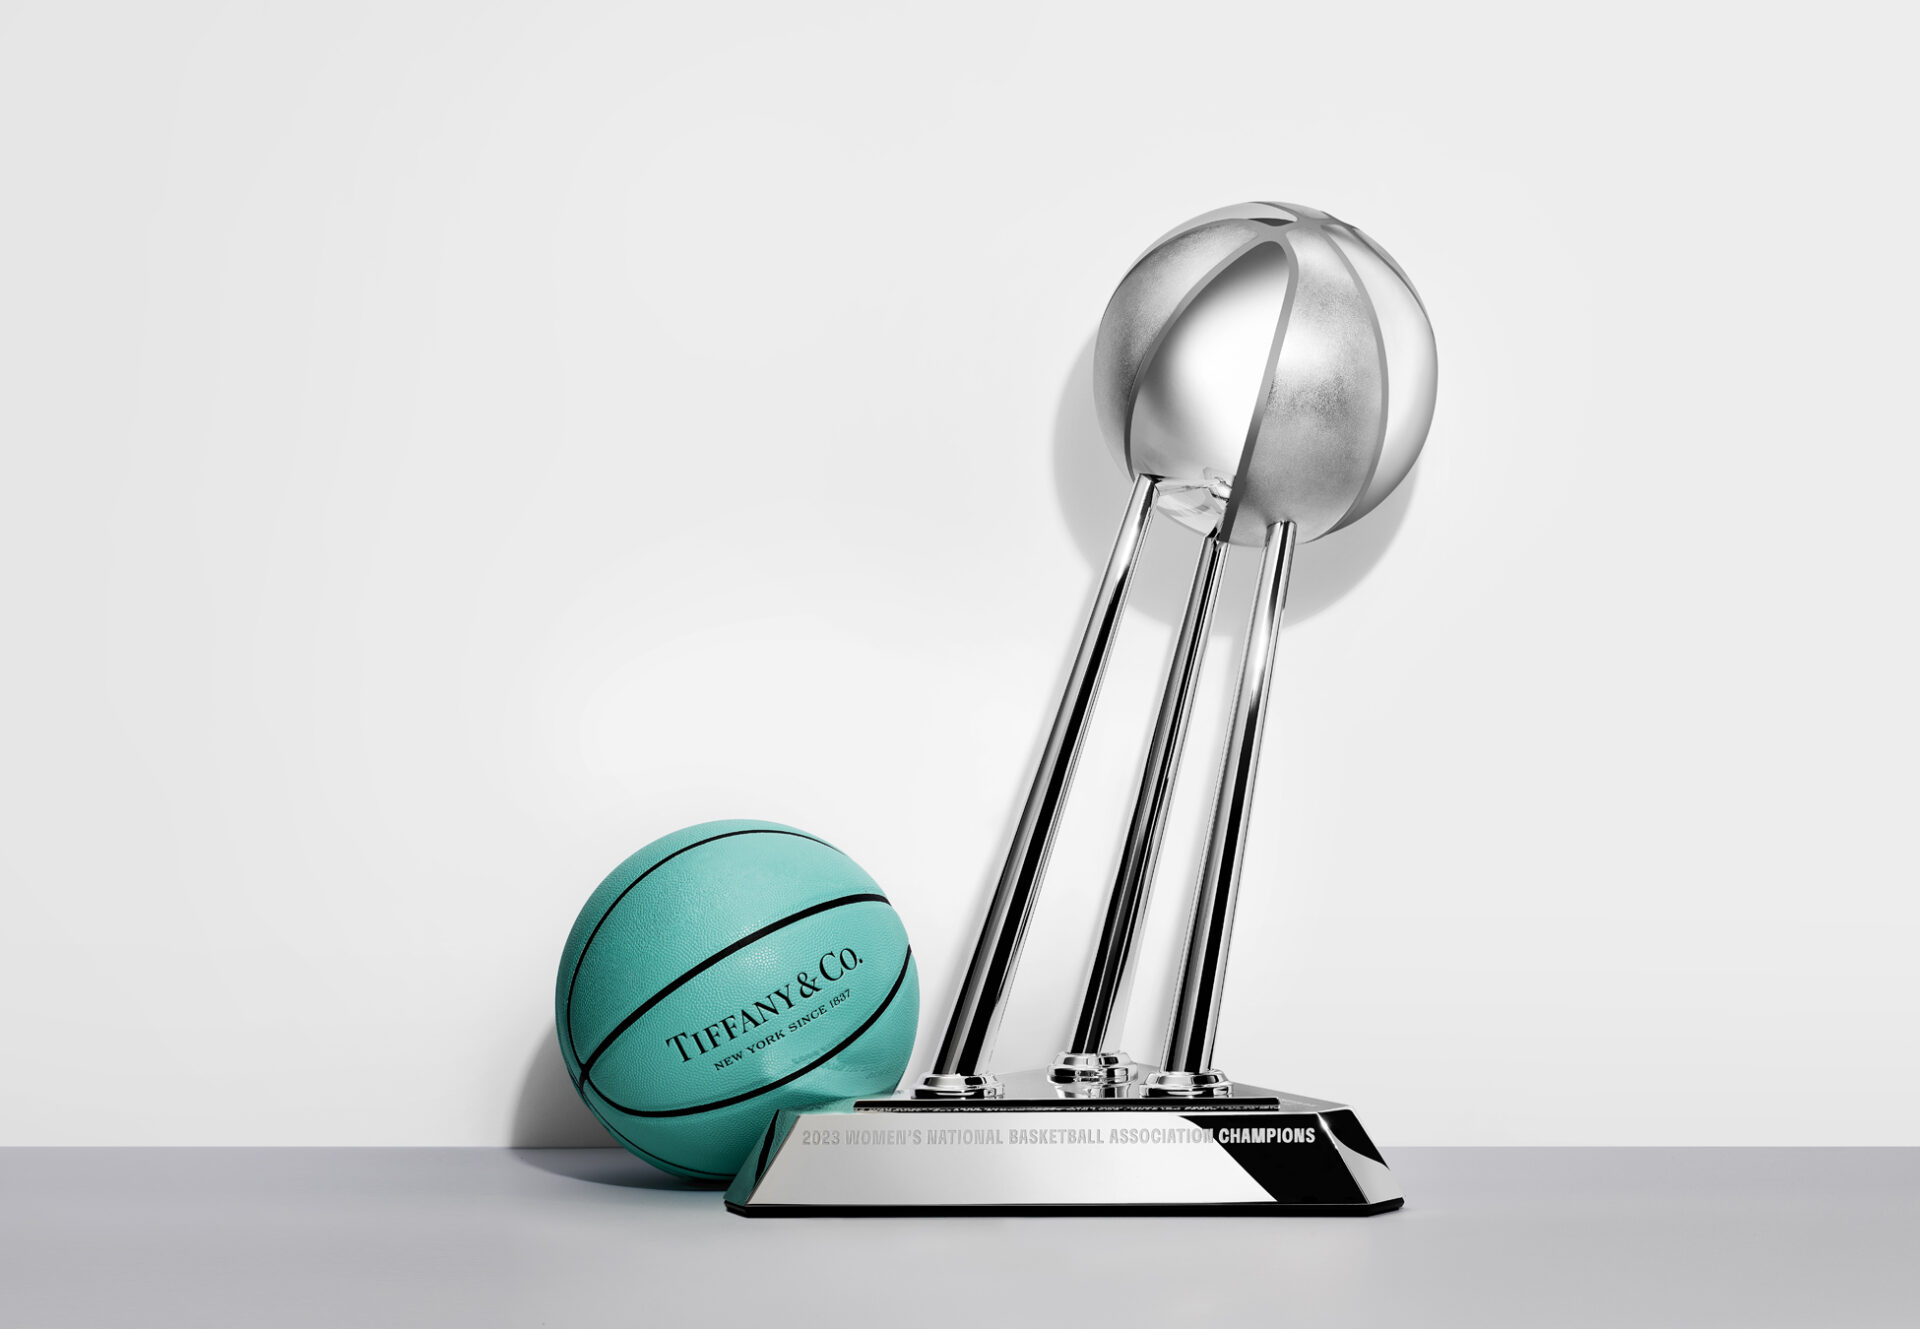 Tiffanydesigned WNBA Finals trophy presented to Las Vegas Aces